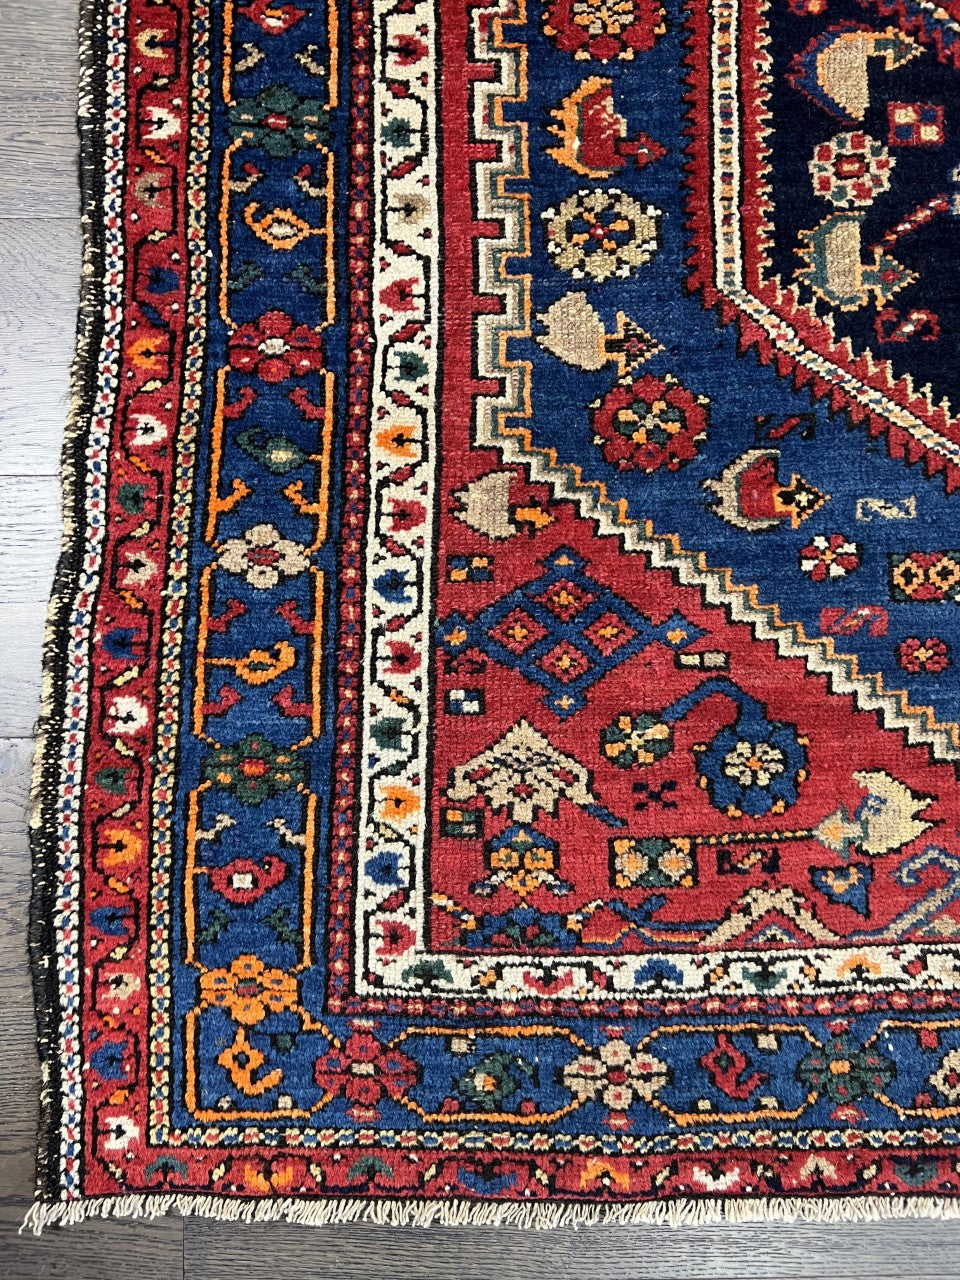 Wonderful antique Handmade Hamadan Rug